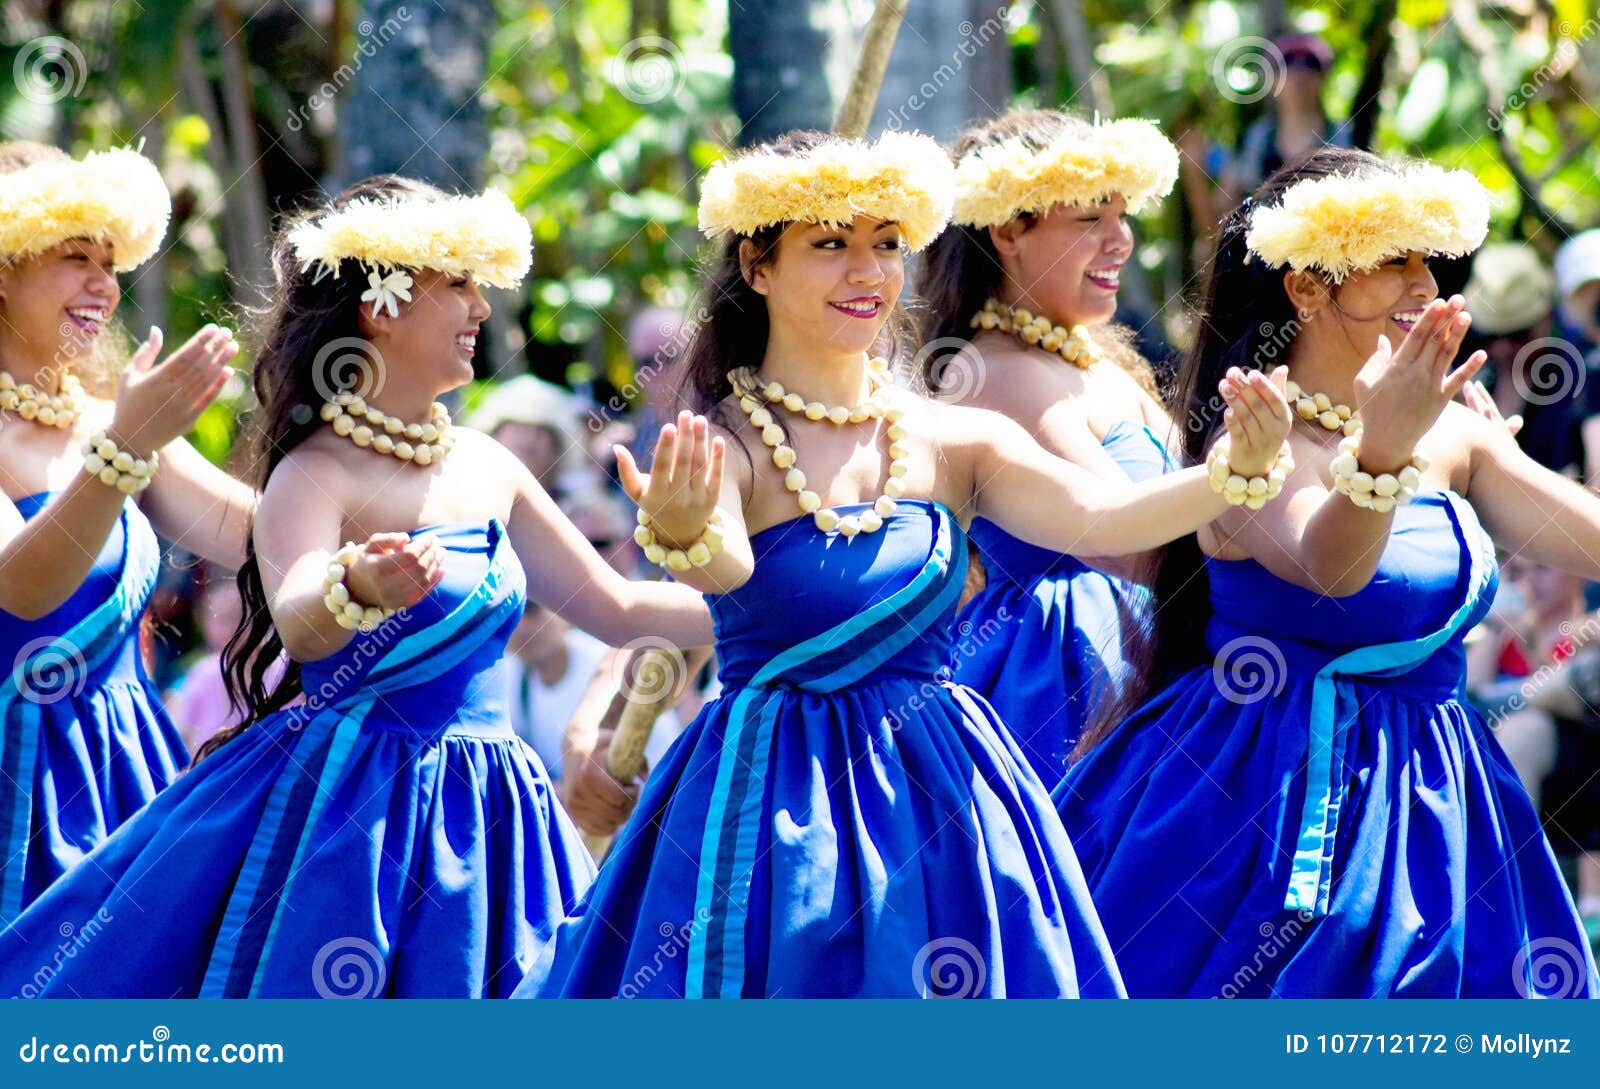 Hawaiian Dancers on a Canoe Float at the Polynesian Cultural